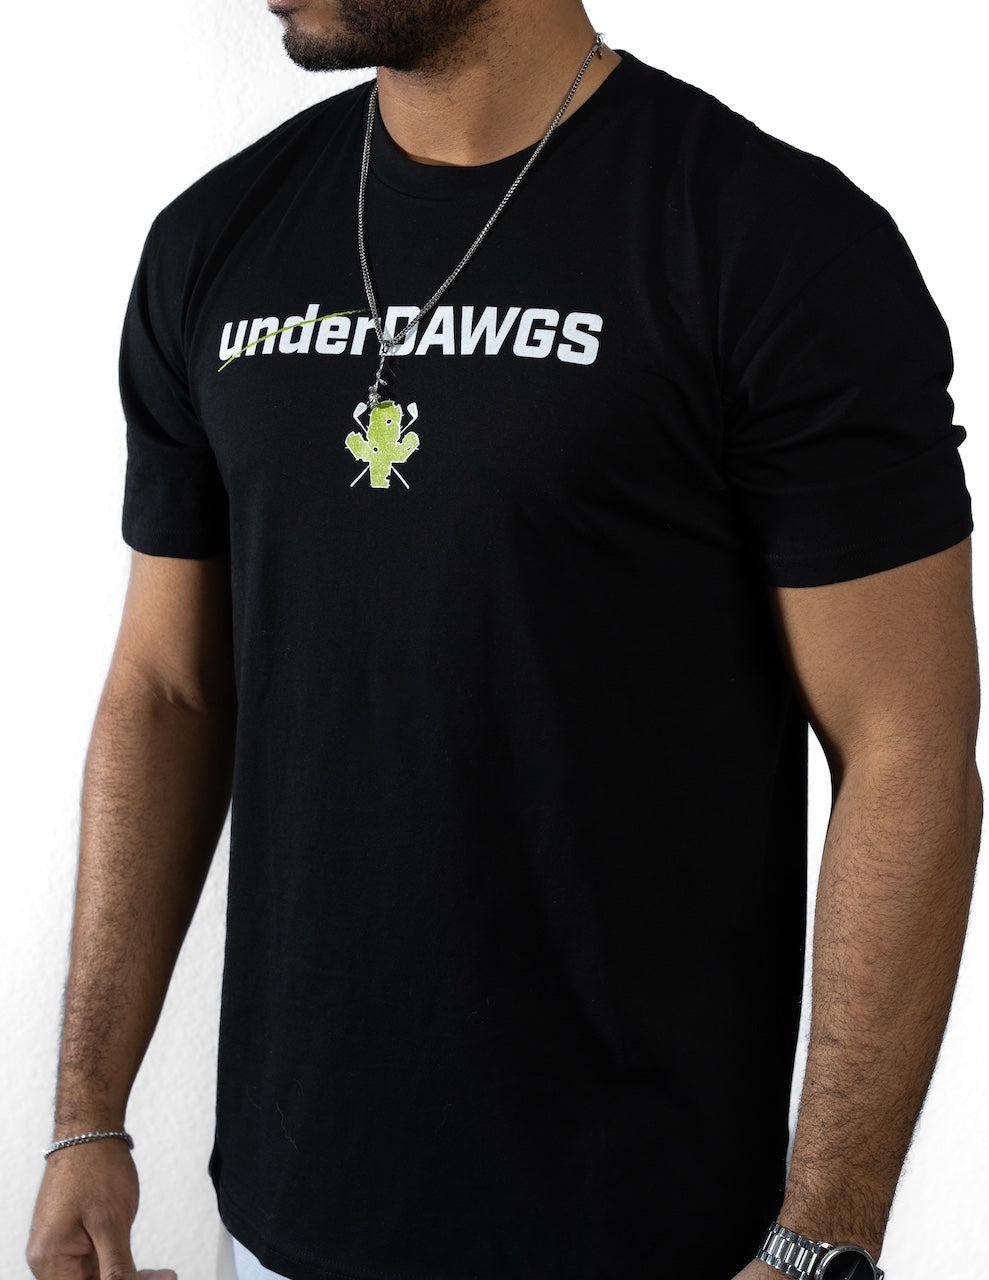 underDAWGS T-Shirt - Black